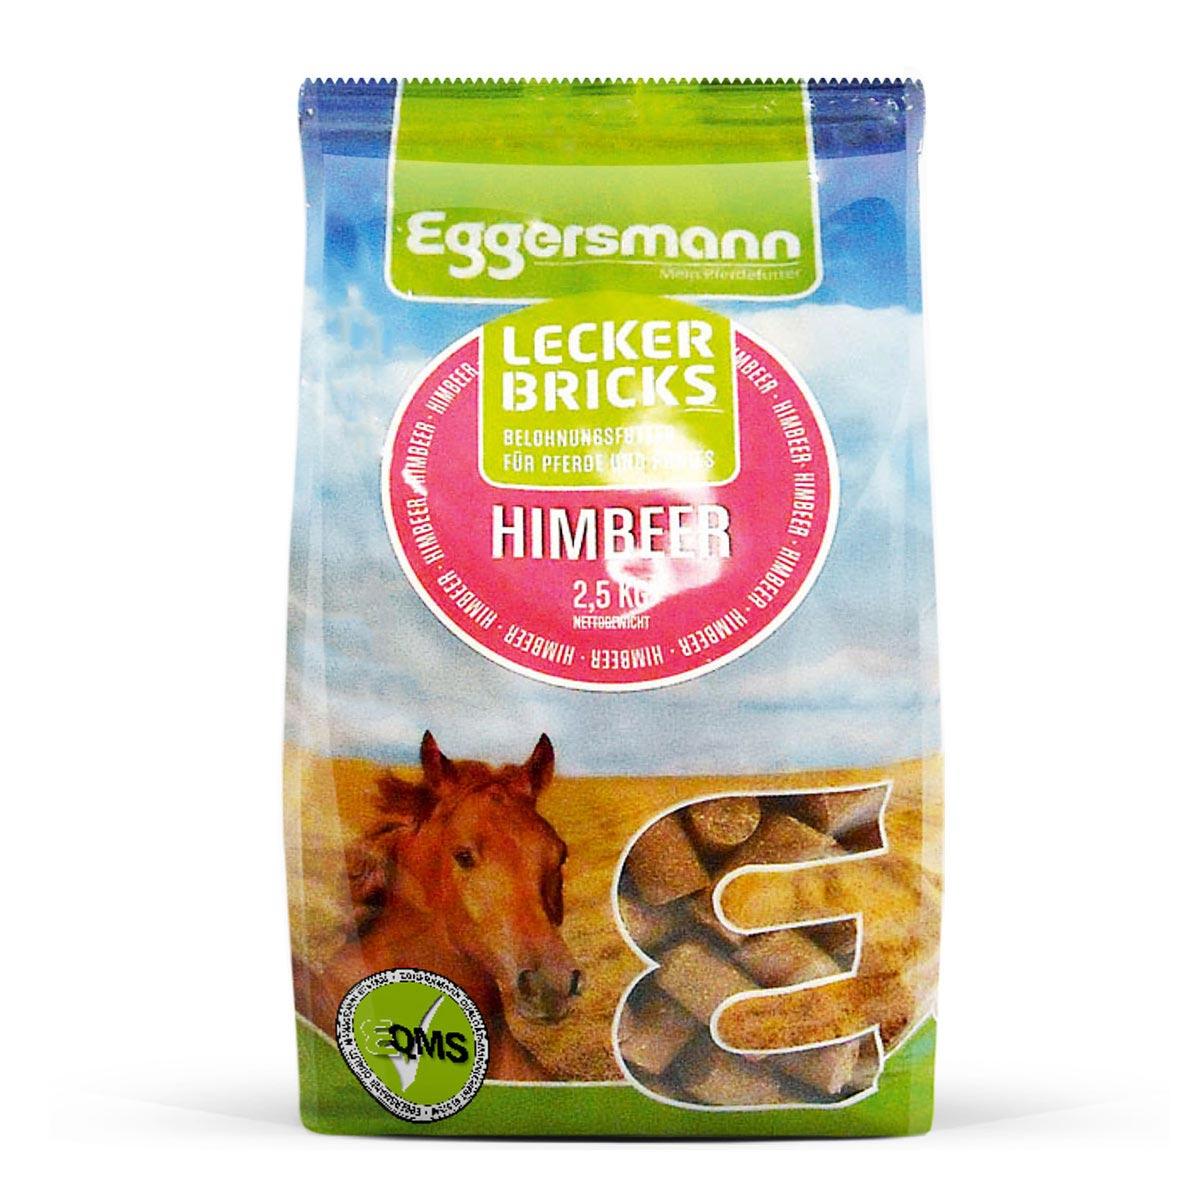 Eggersmann Lecker Bricks Himbeer 2,5 kg